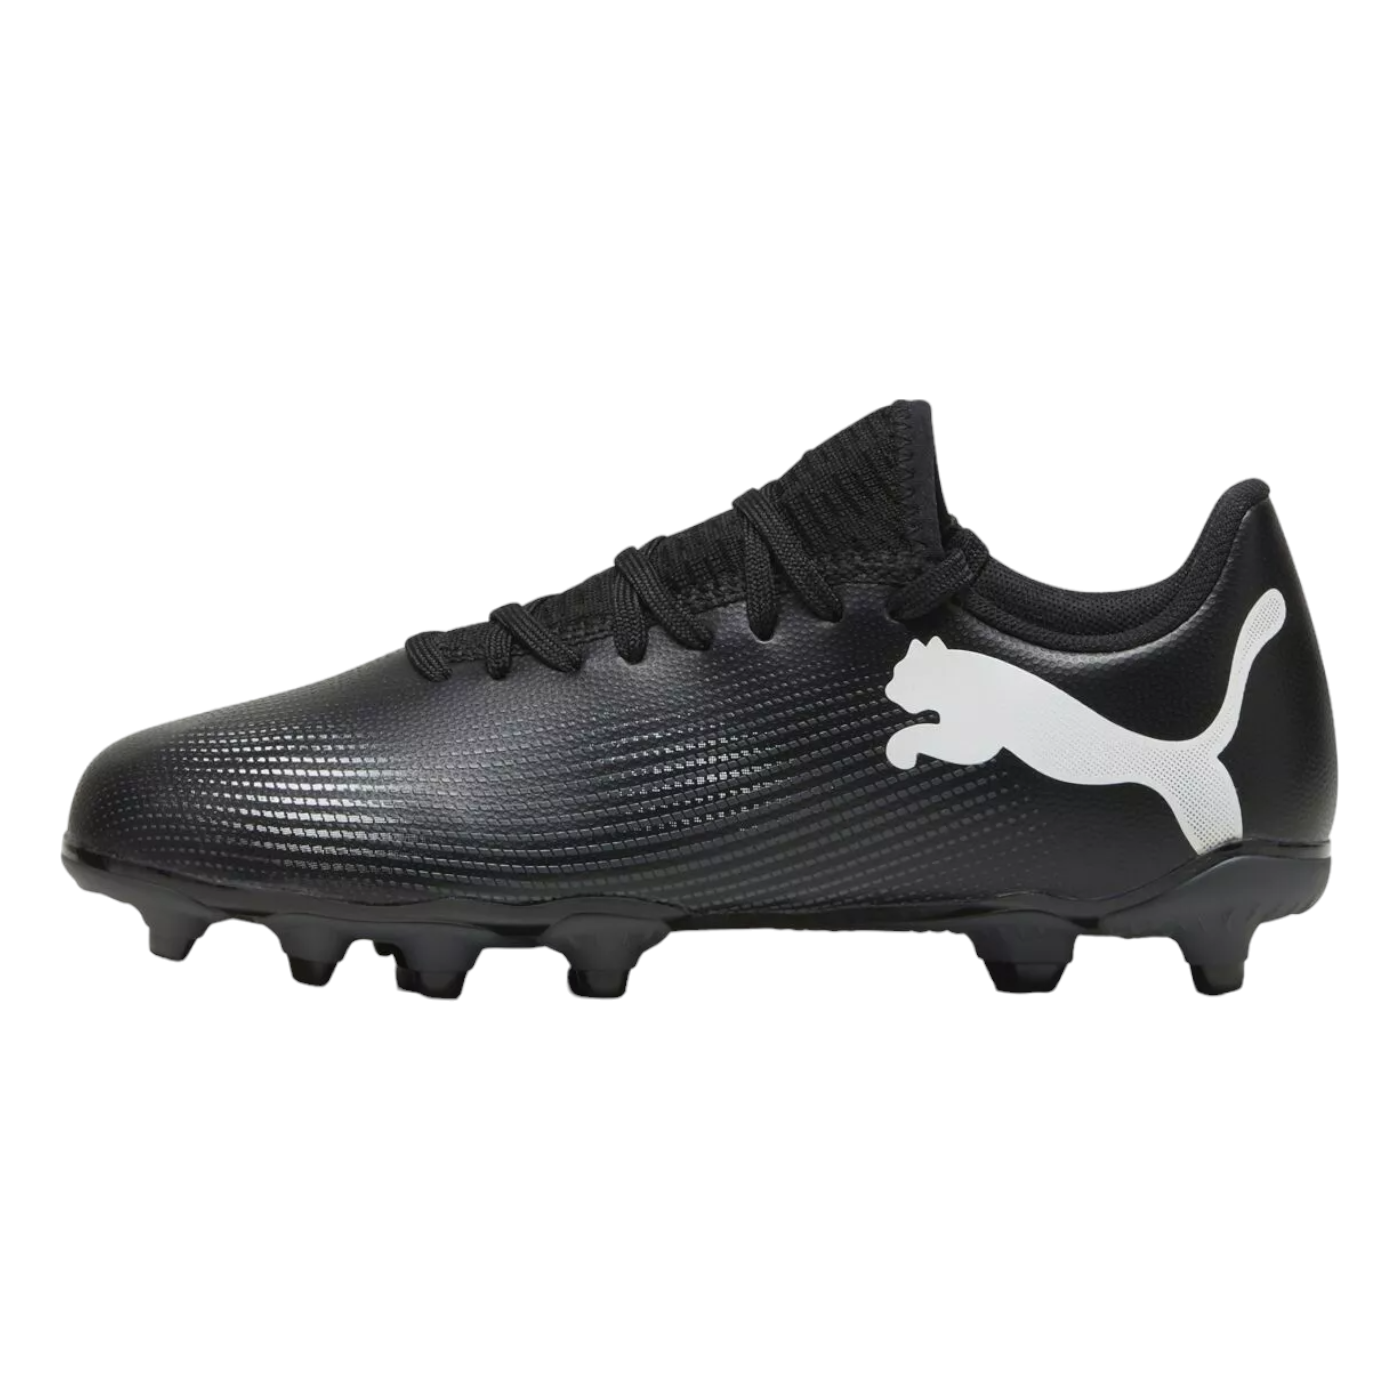 - PUMA FUTURE 7 PLAY FG/AG Junior YOUTH Unisex Football Boots BLACK/WHITE (107734 02) - K62 - R2L17